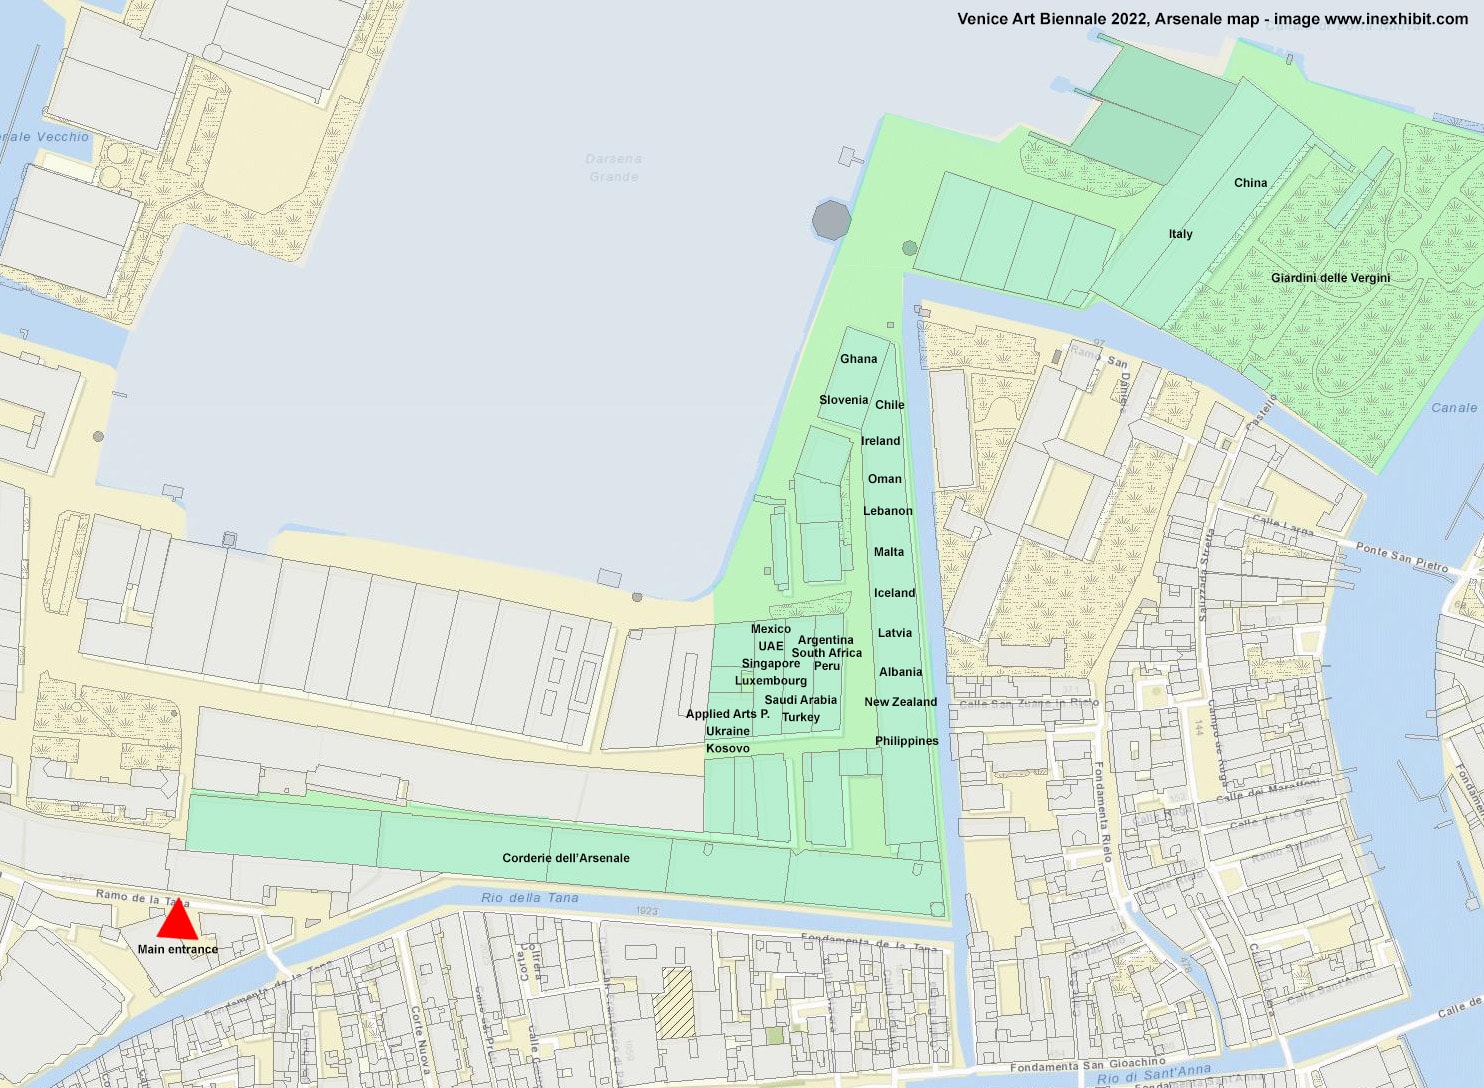 Venice Art Biennale 2022 map, Arsenale, Inexhibit